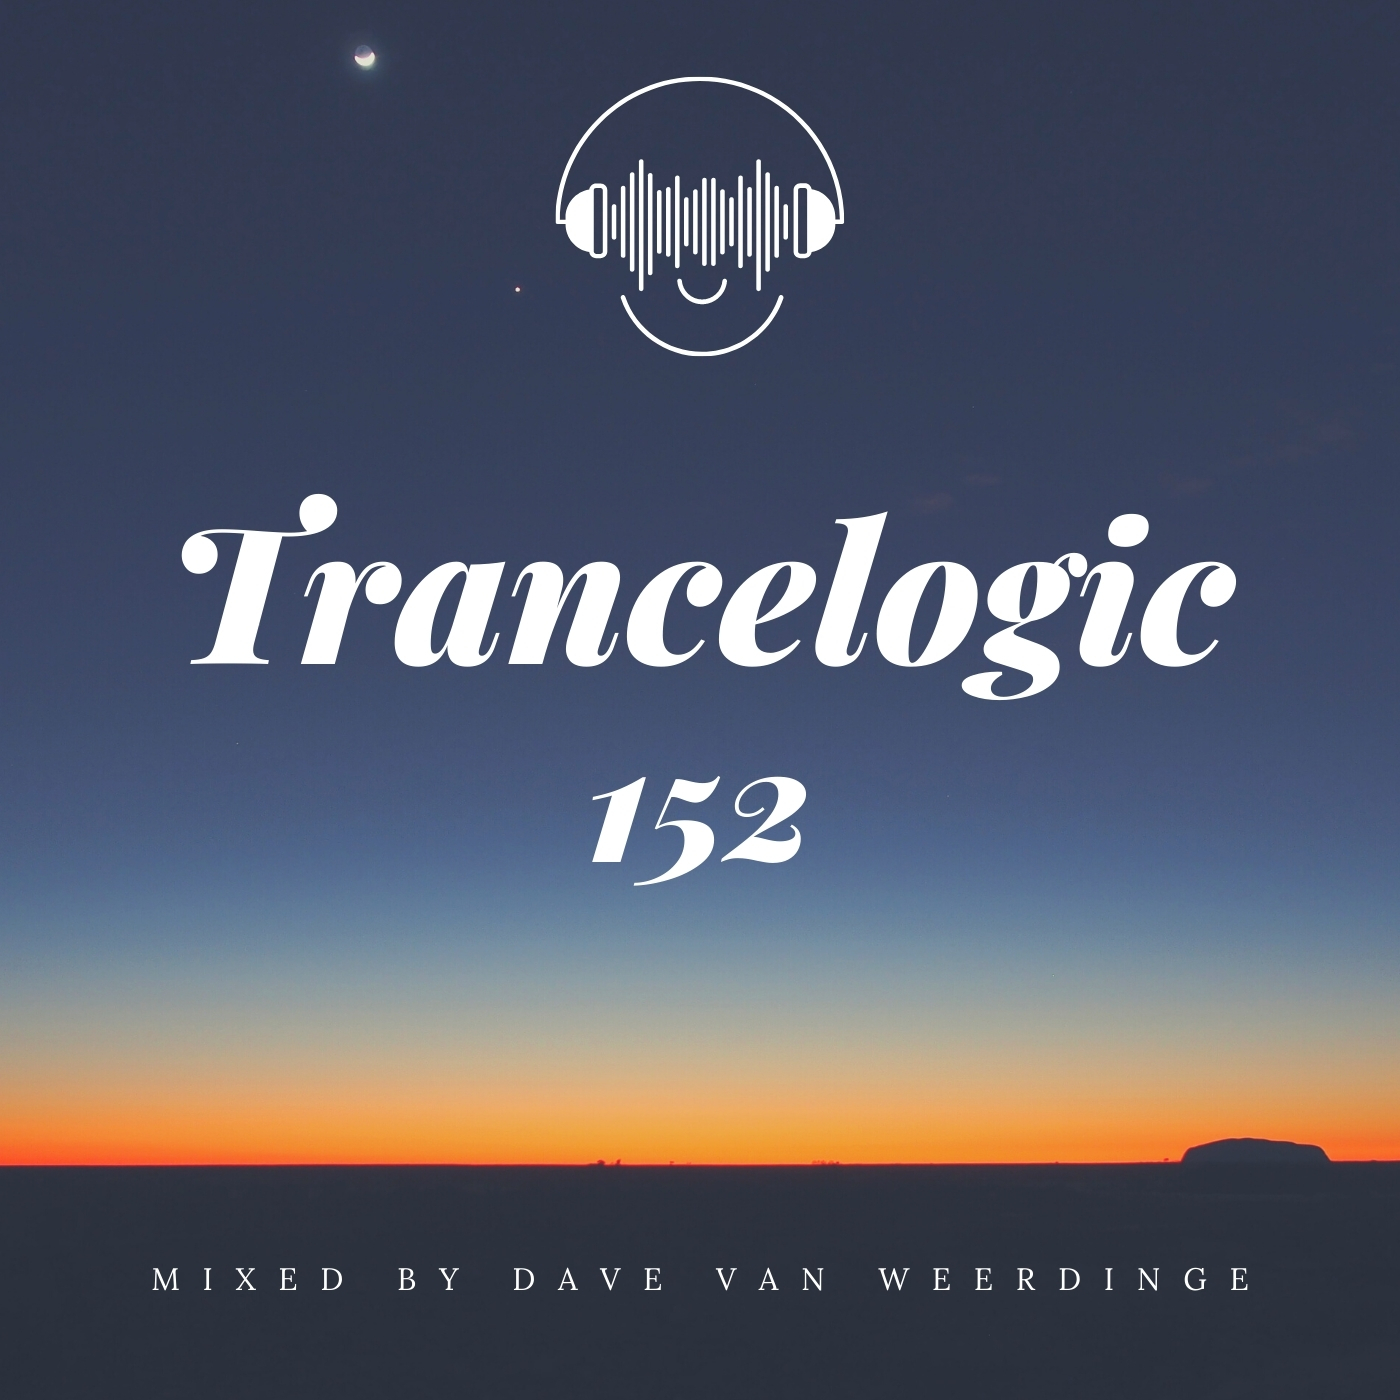 Trancelogic 152 by Dave van Weerdinge